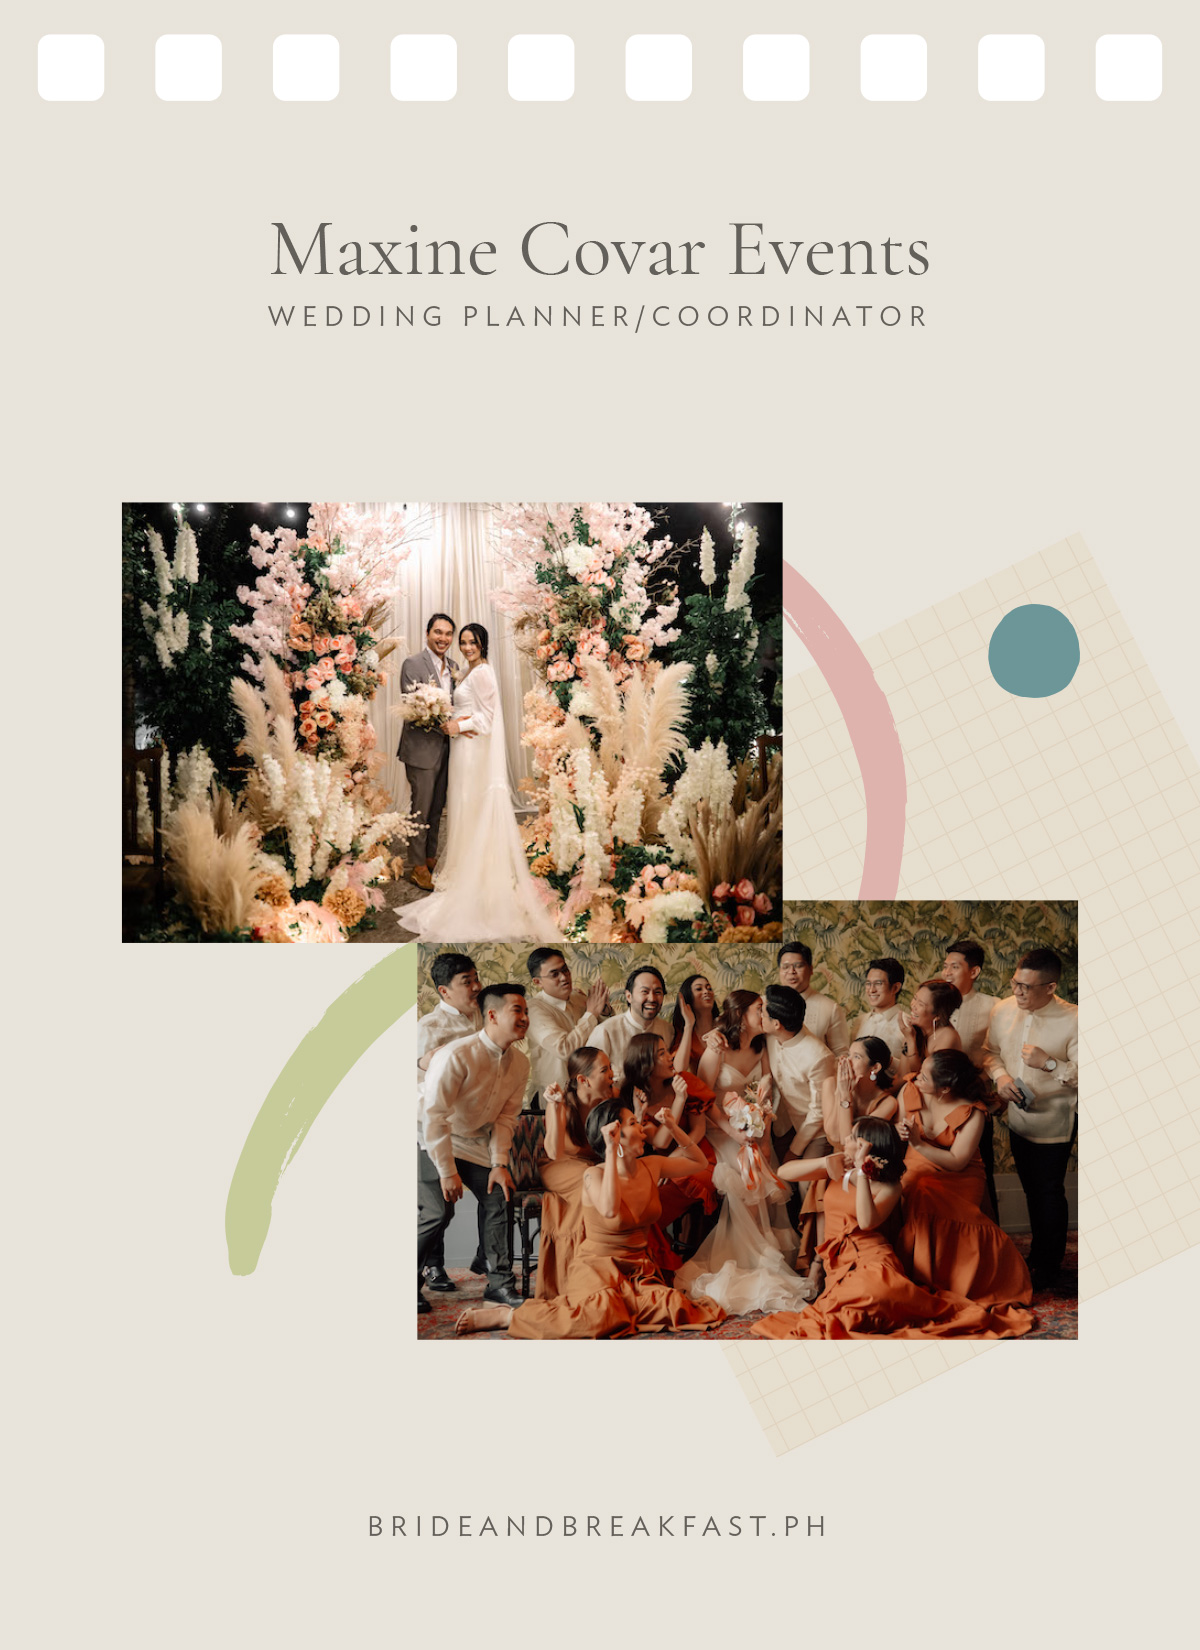 Maxine Covar Events